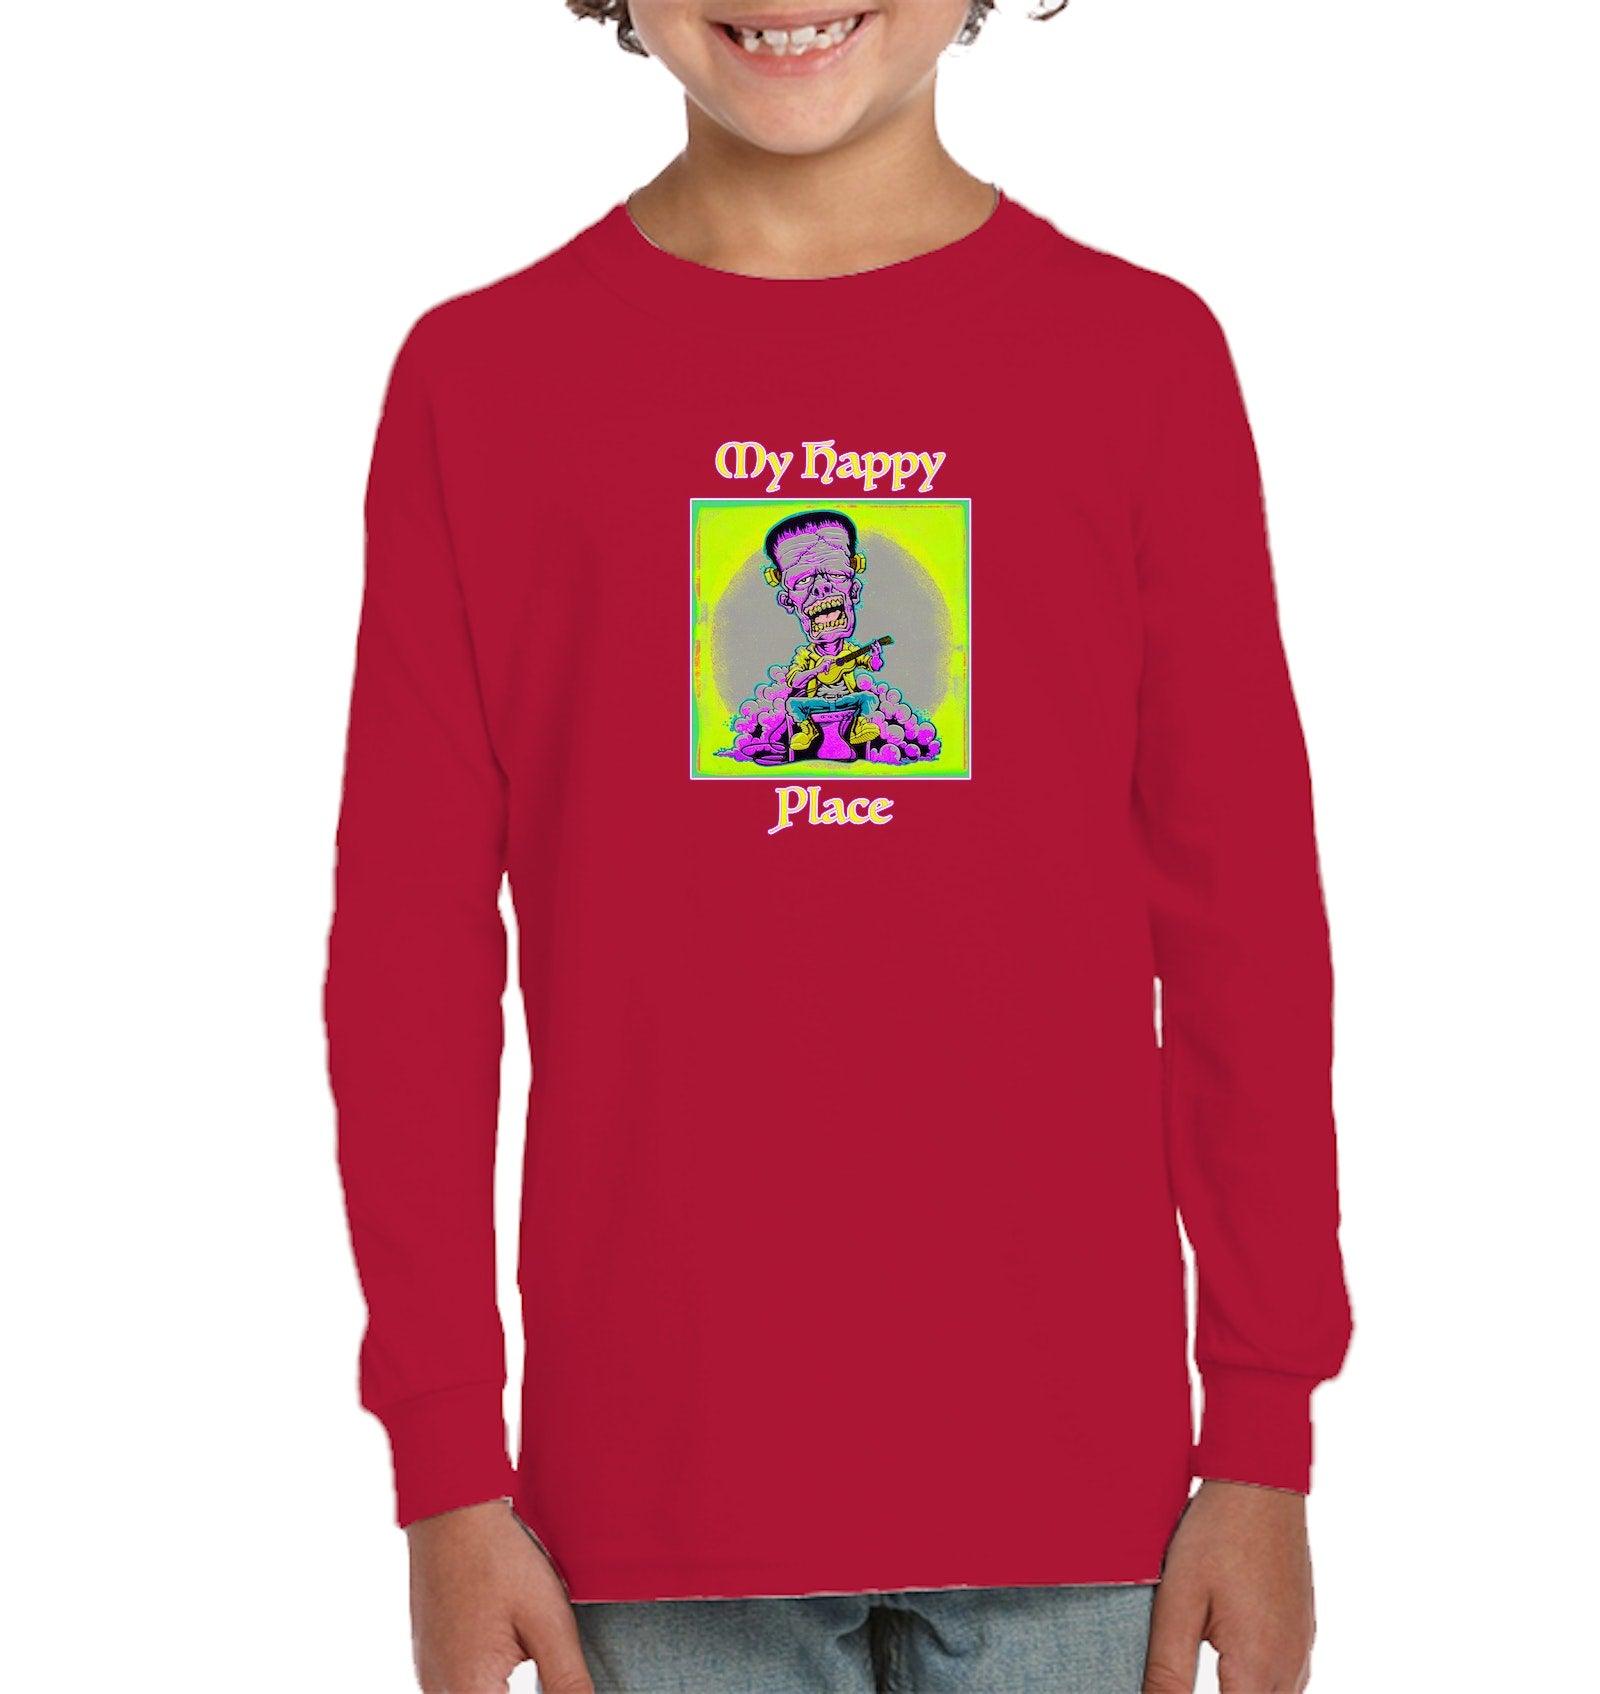 Kids Fleece Pullover Sweatshirt - Beyond T-shirts